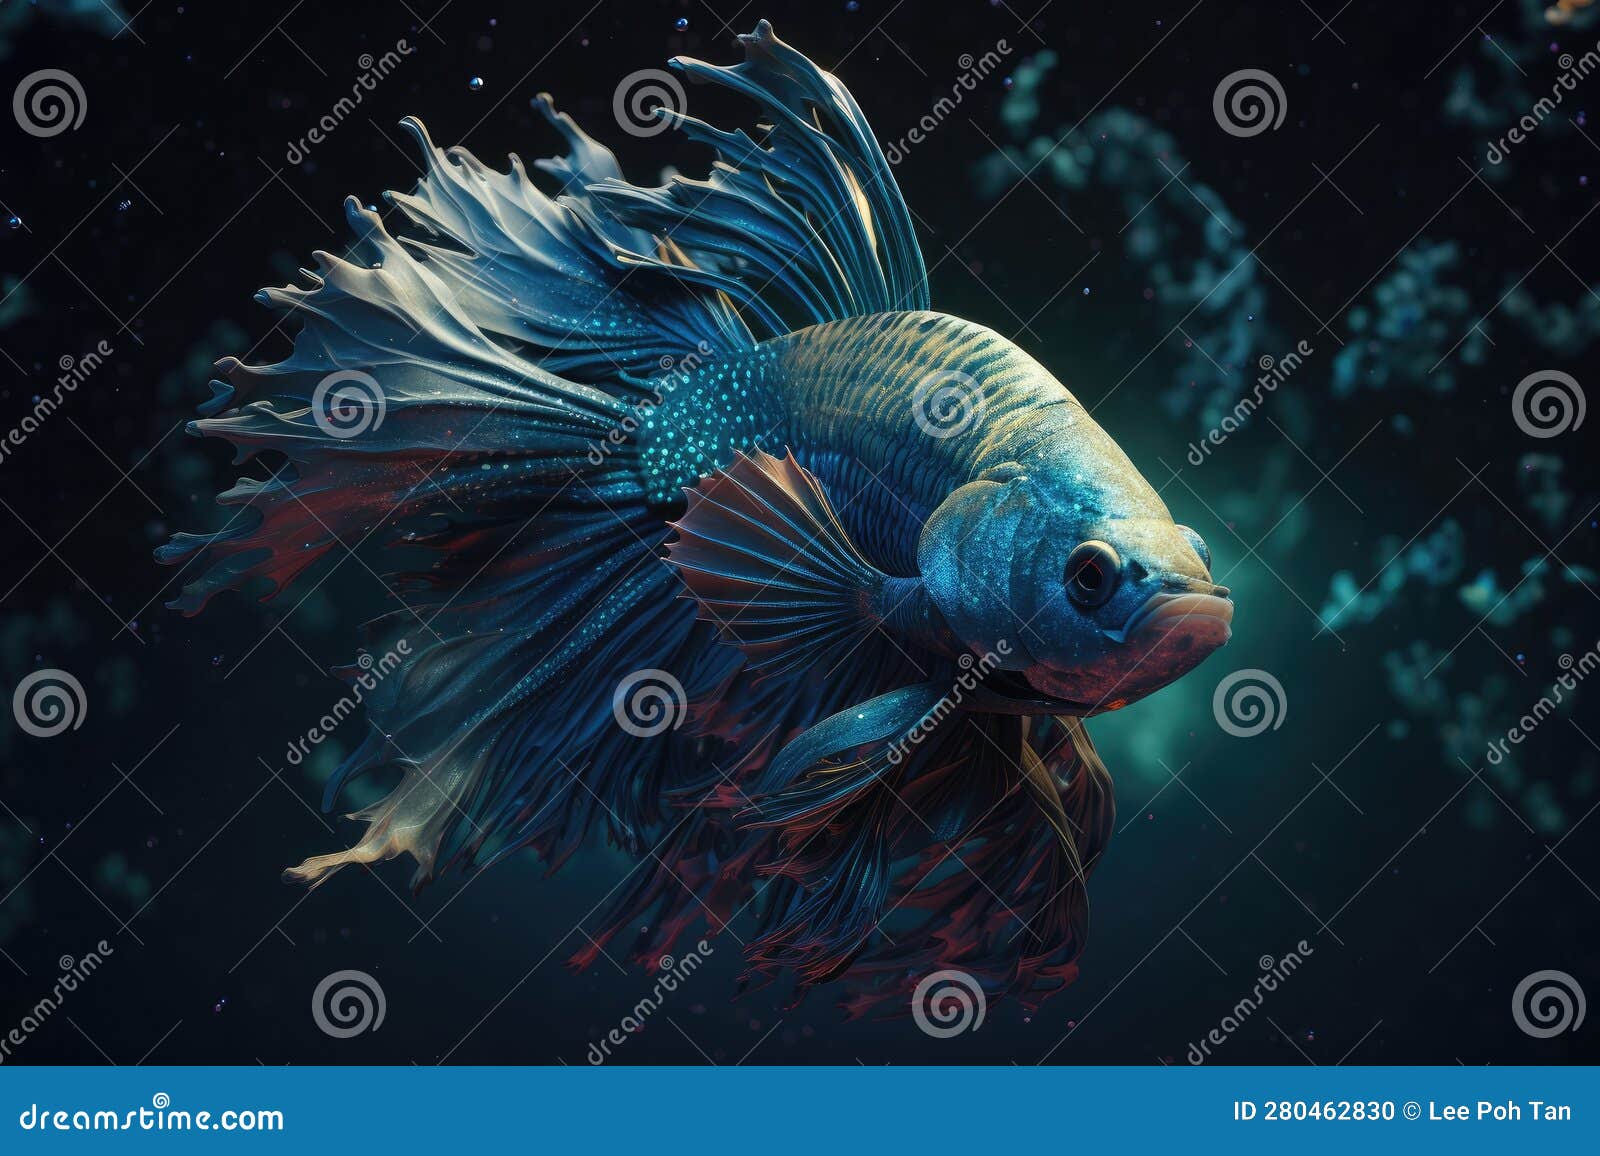 https://thumbs.dreamstime.com/z/blue-betta-fish-dark-environment-water-generated-use-ai-280462830.jpg